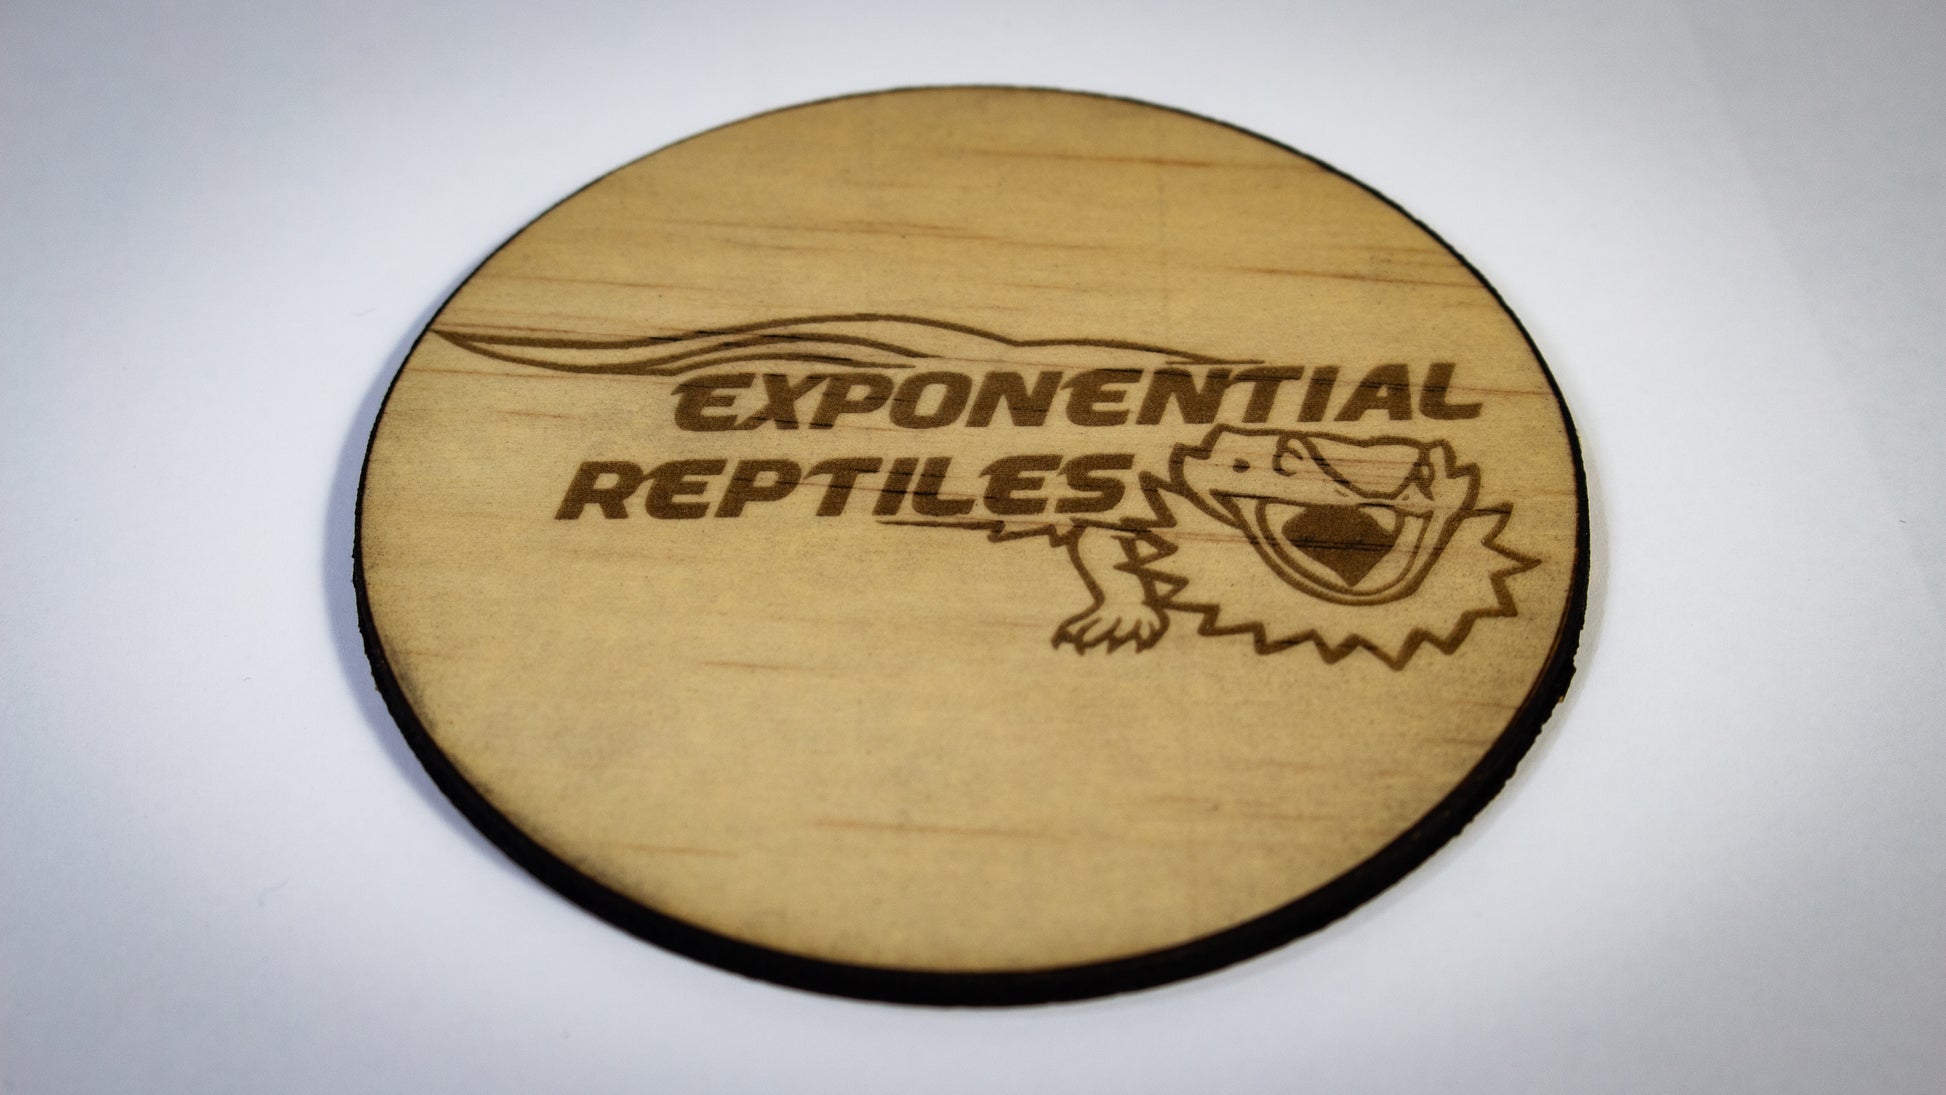 Exponential Reptiles Branded Coffee Coaster 